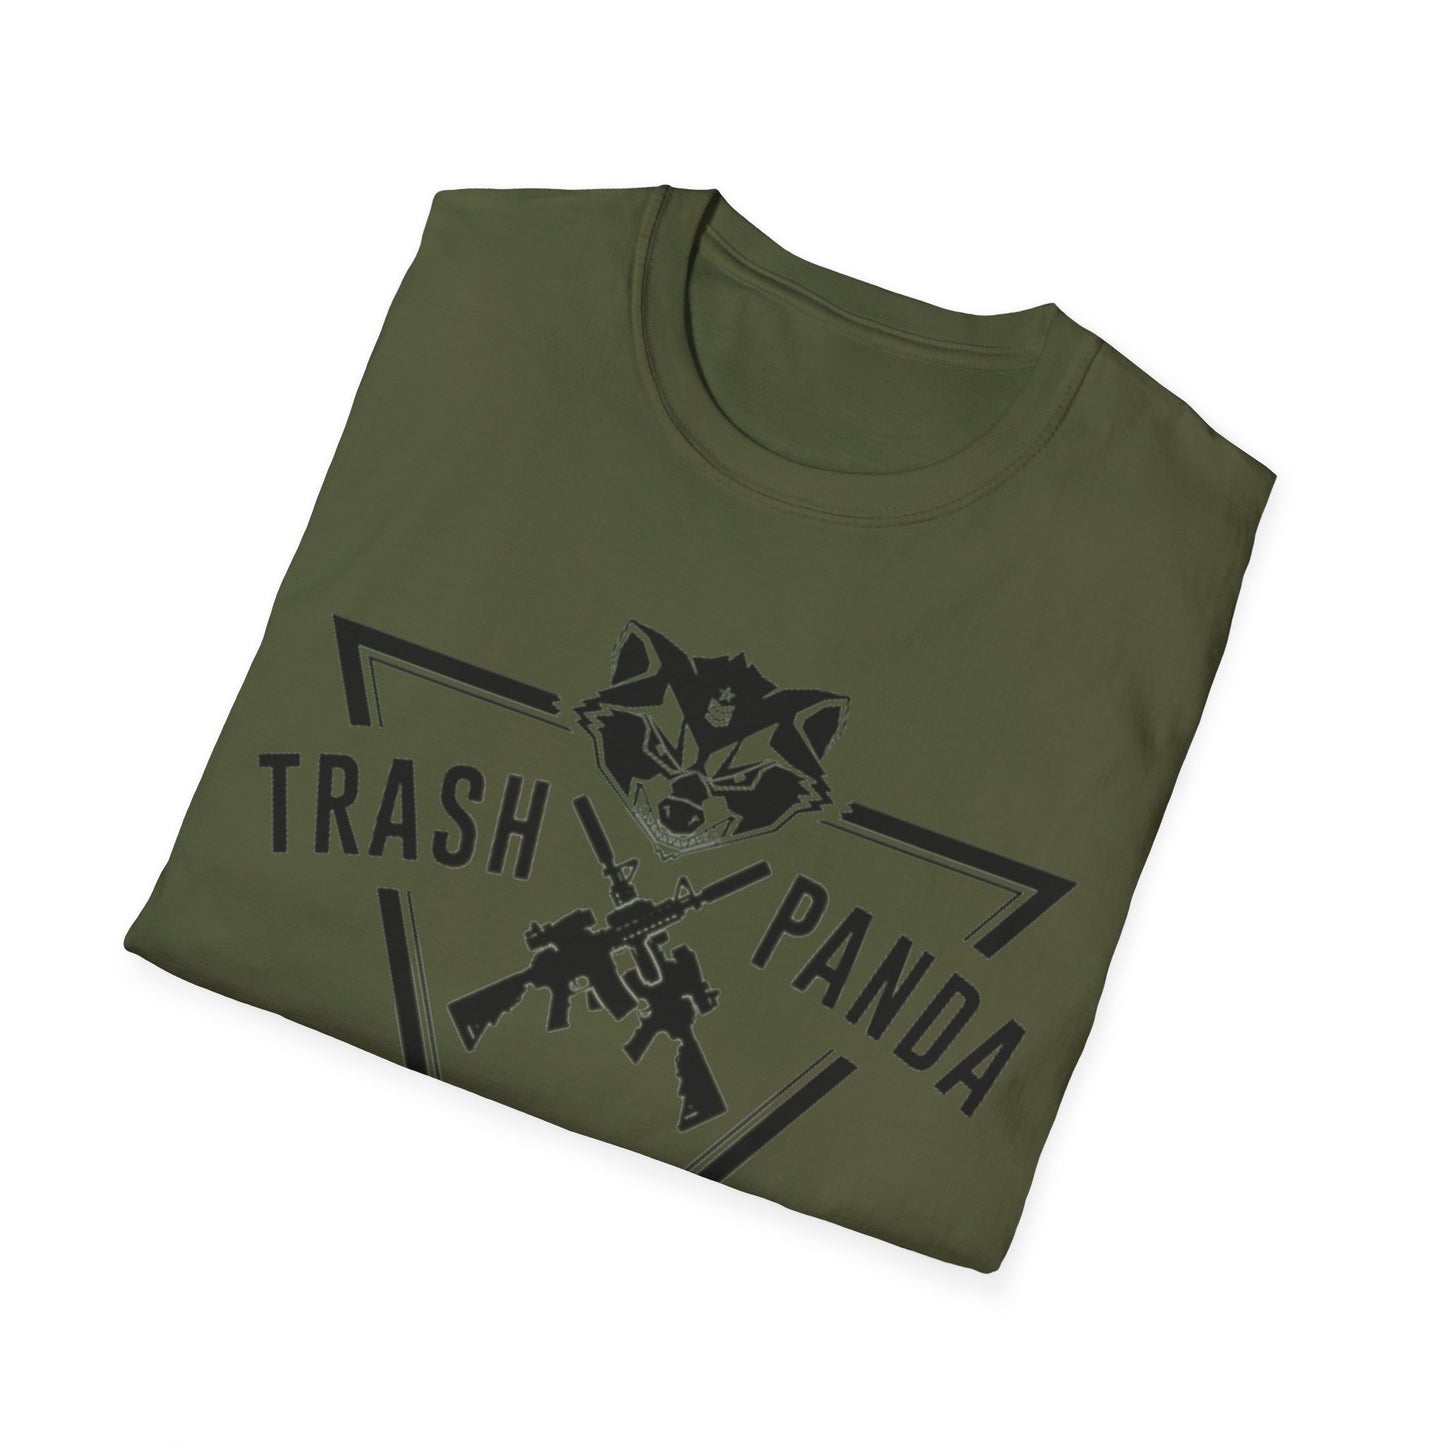 Trash Panda - Unisex Softstyle T-Shirt